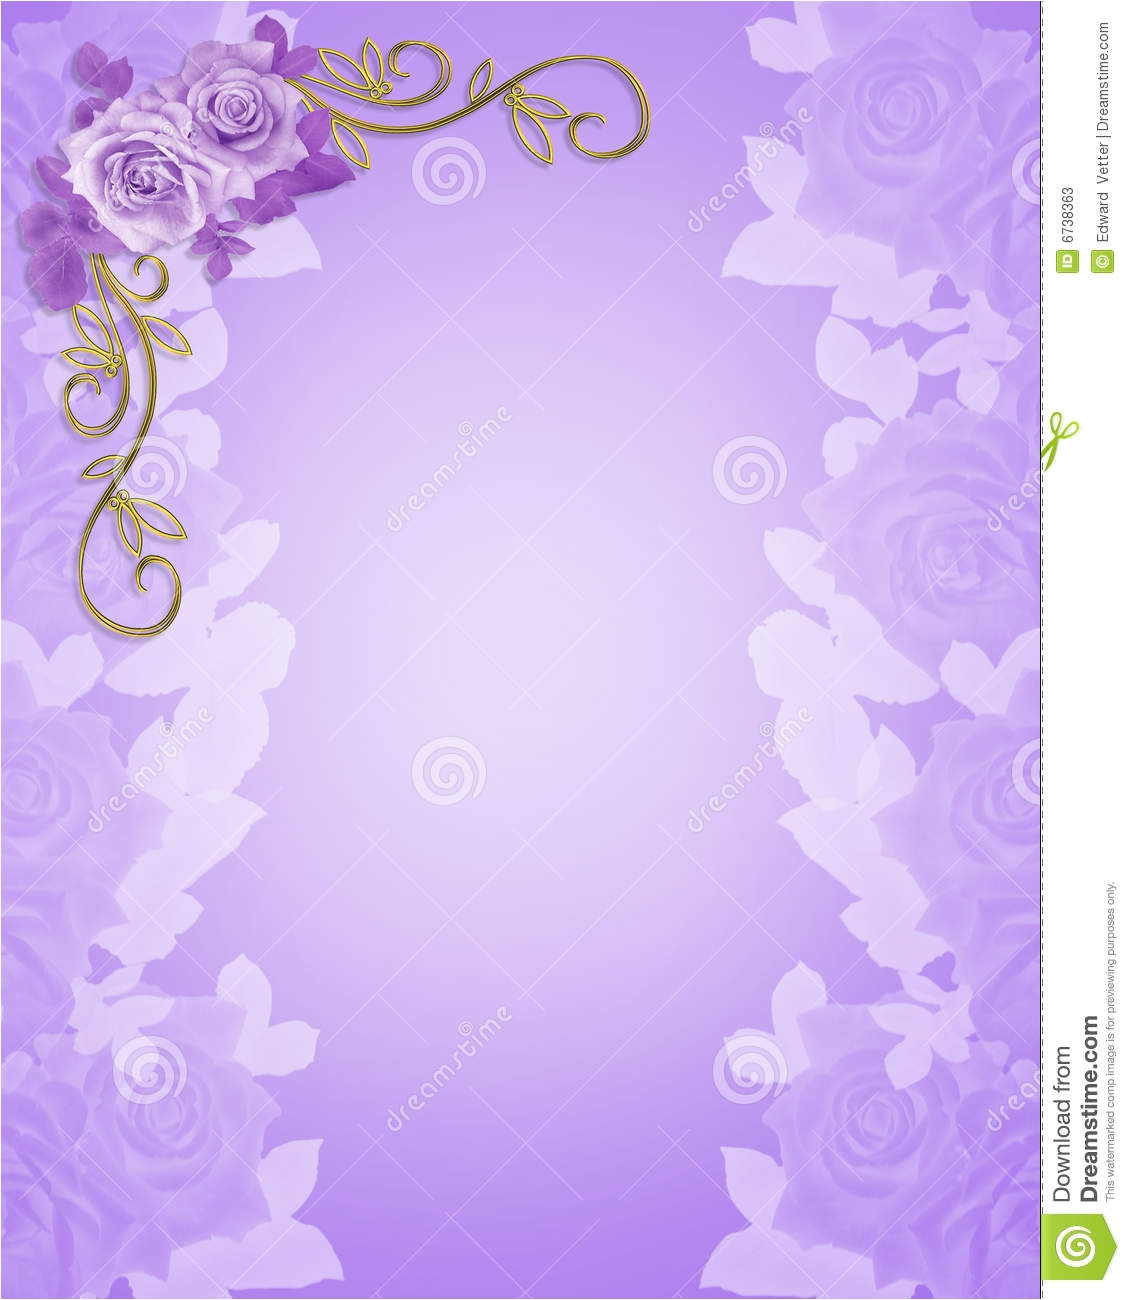 stock photos wedding invitation purple roses image6738363